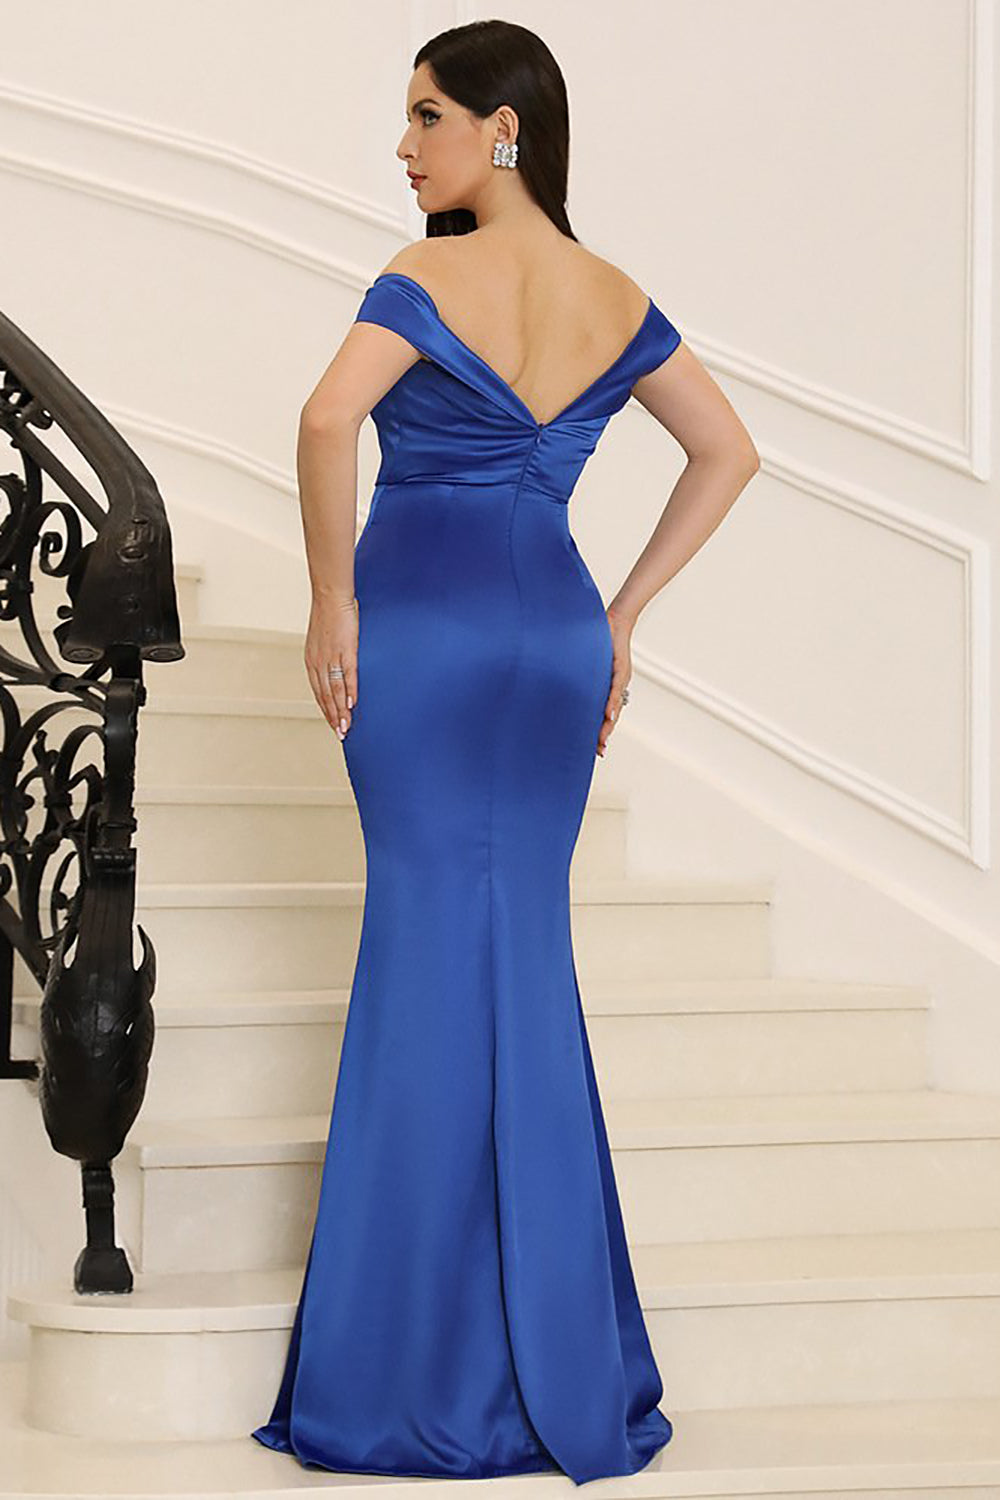 Satin Mermaid Royal Blue Long Prom Dress